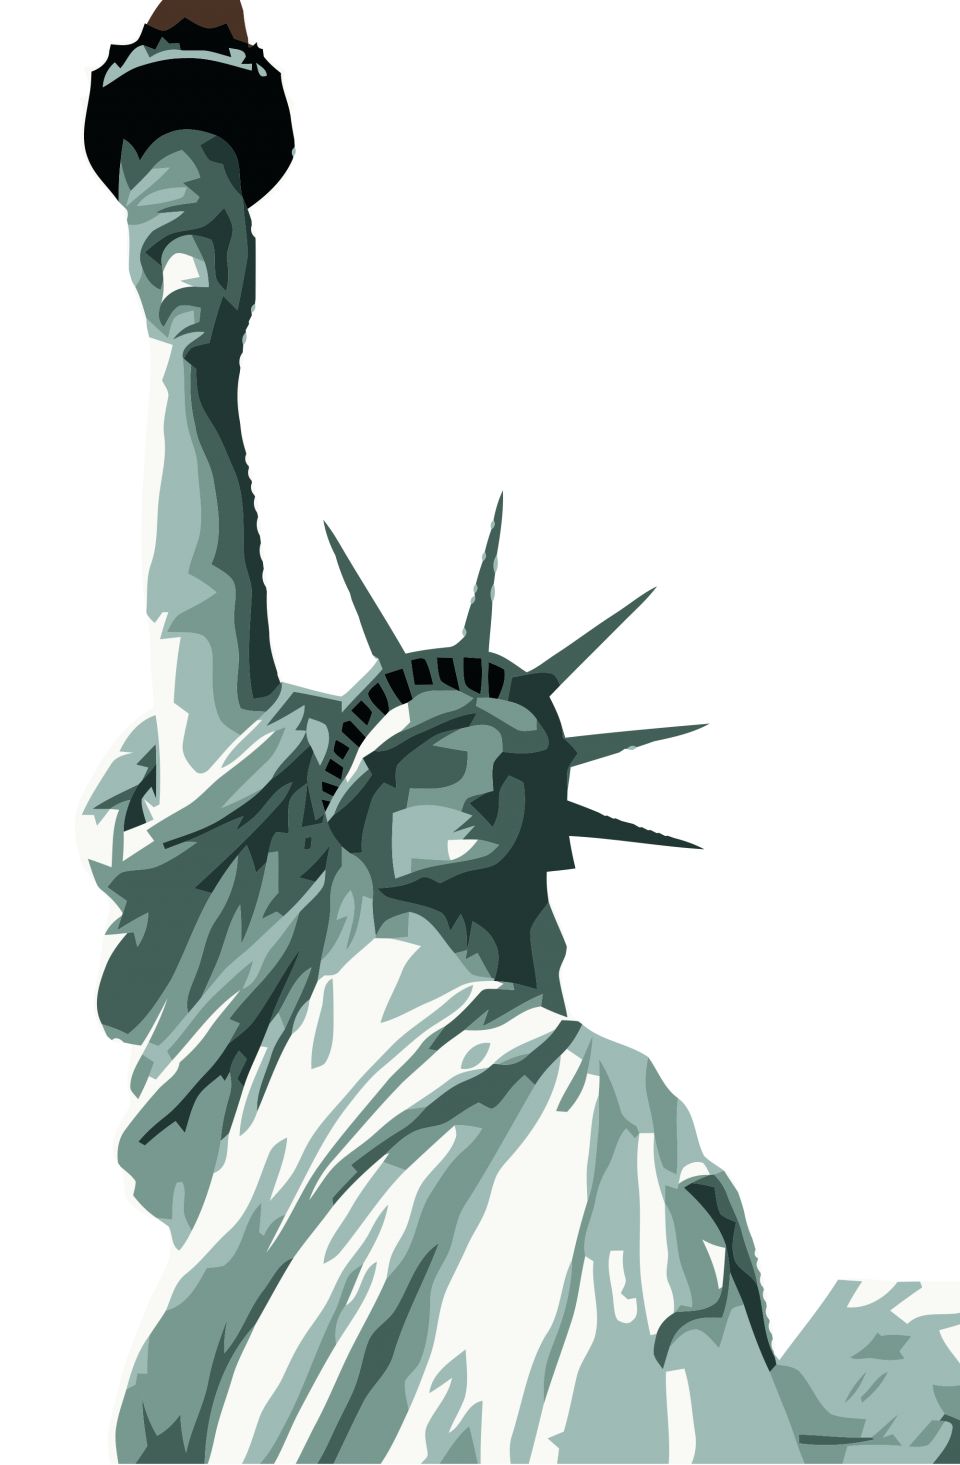 Statue Of Liberty PNG Image - PurePNG | Free transparent CC0 PNG Image ...